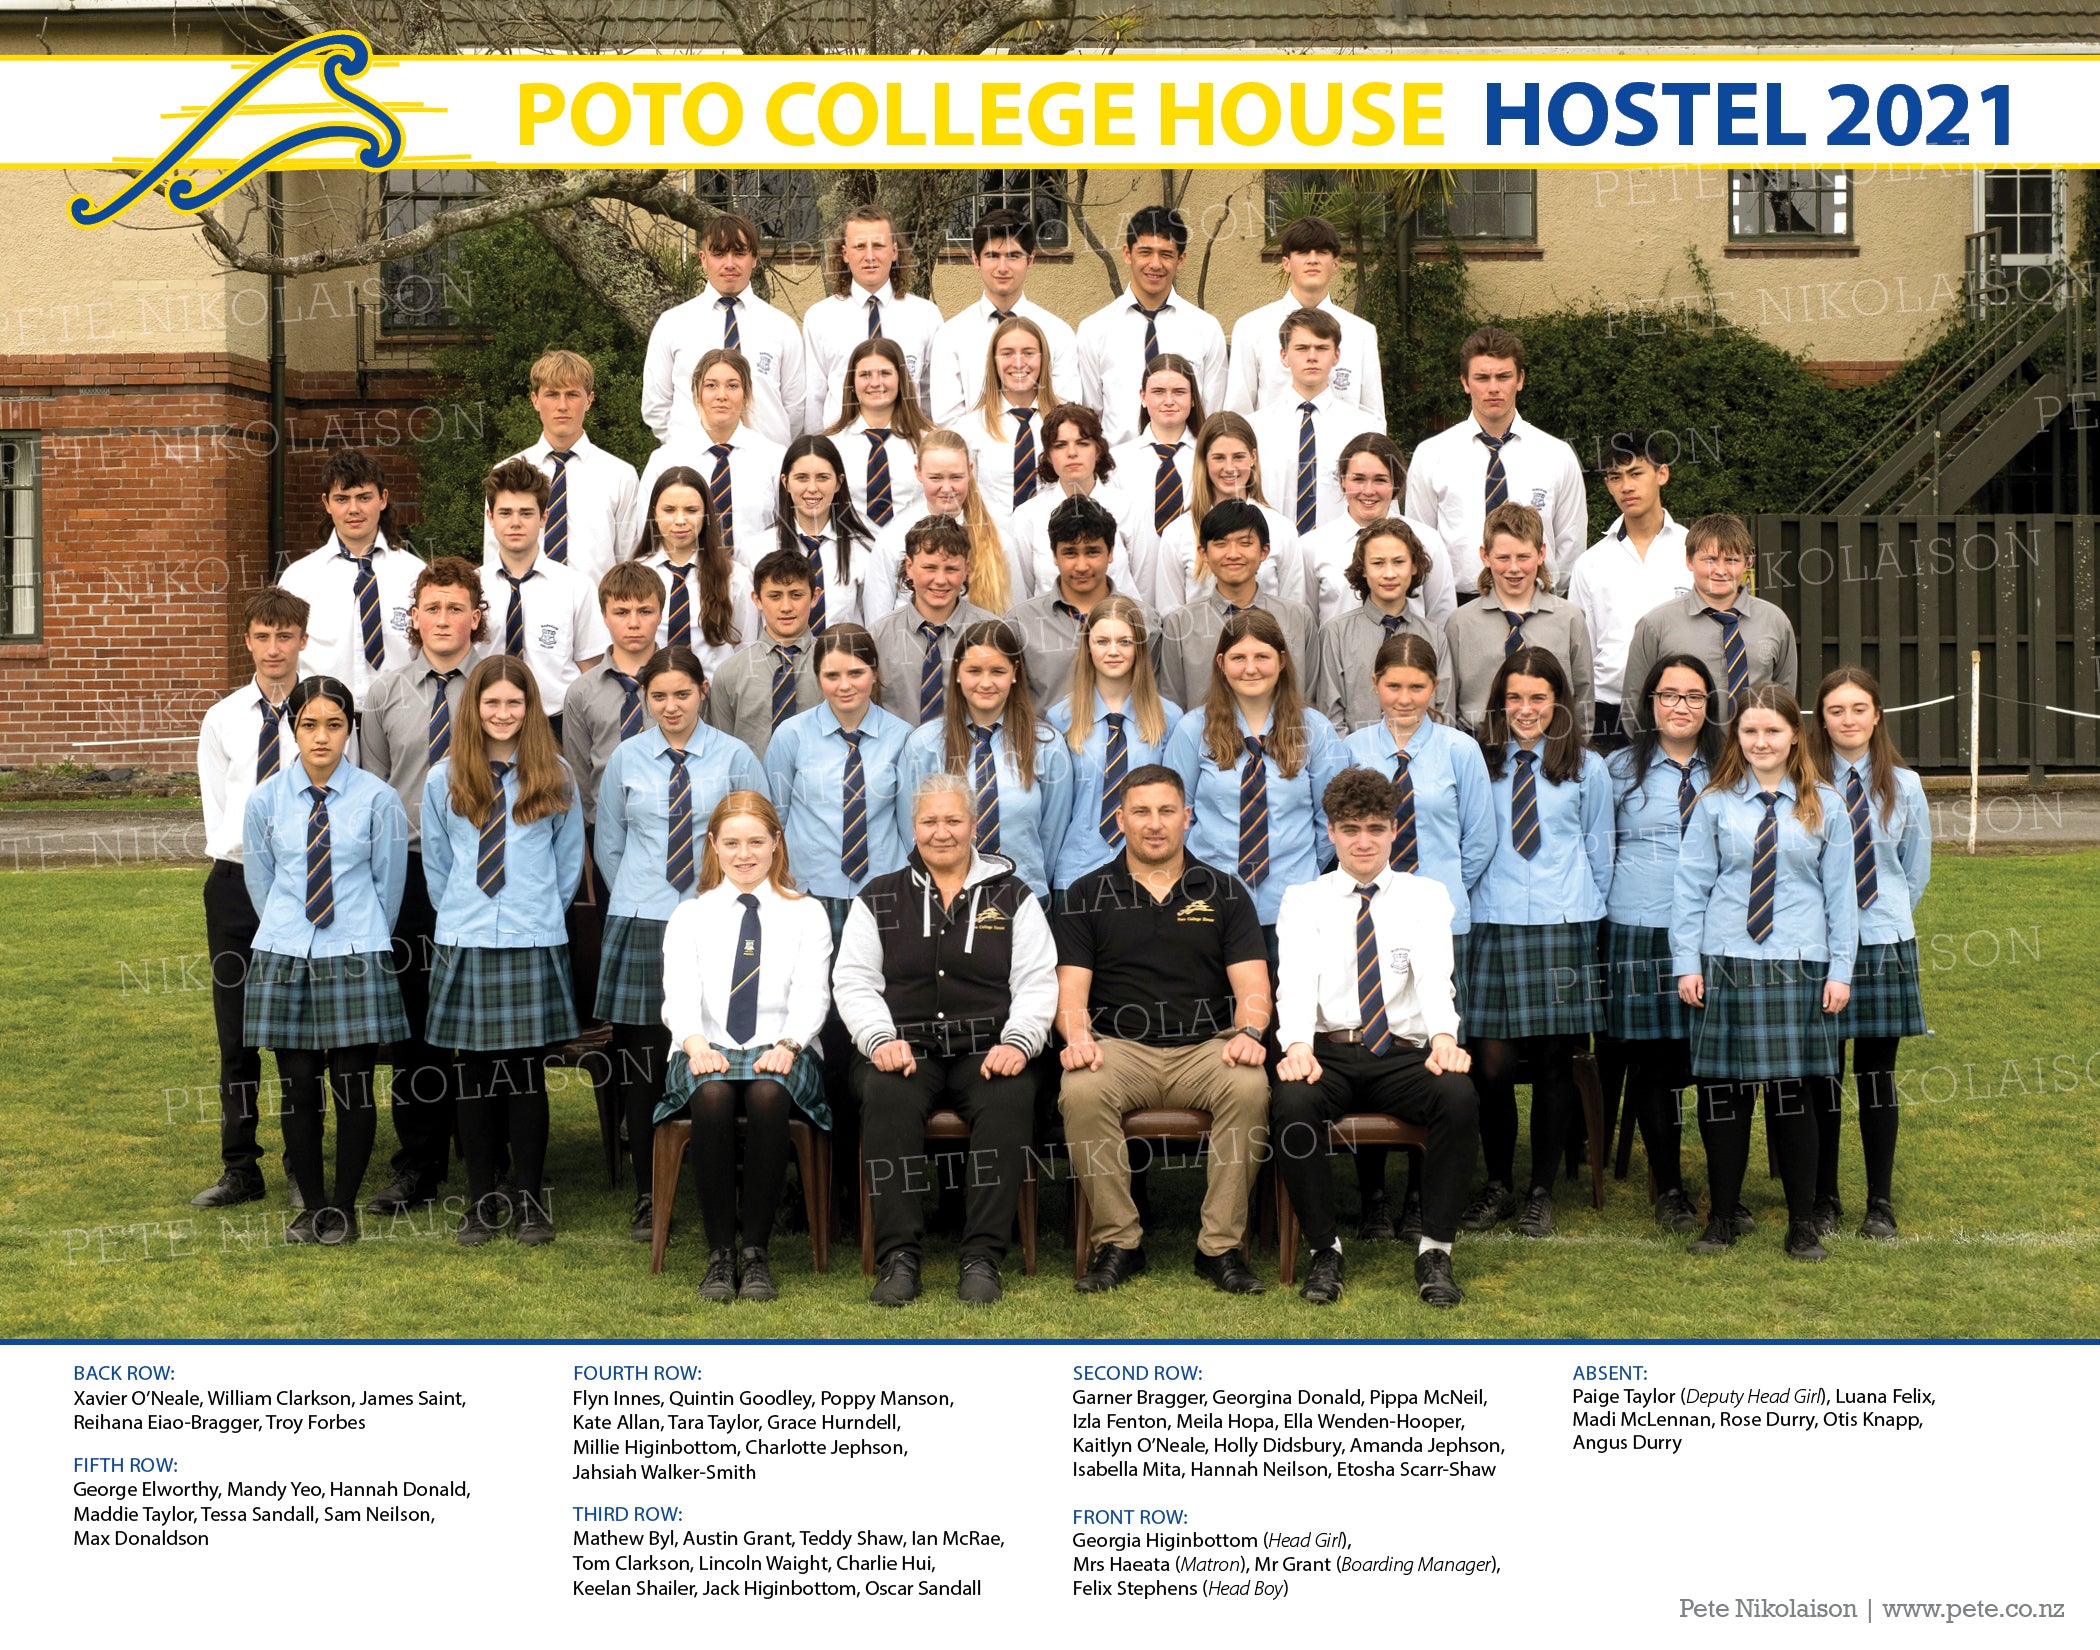 Whole Hostel - Poto College House - 2021